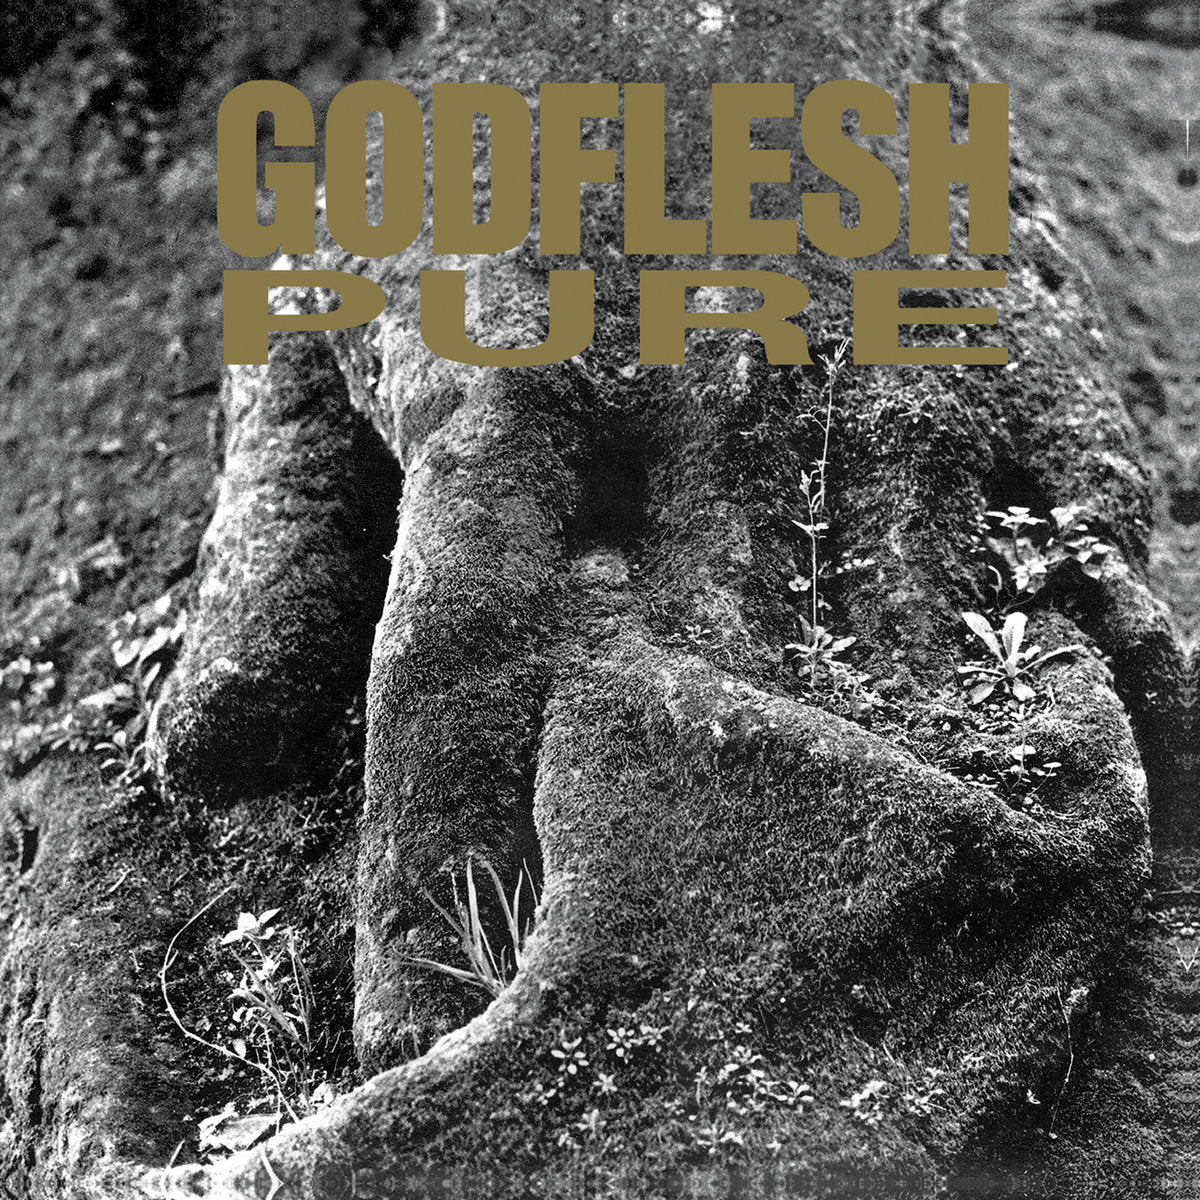 Godflesh "Pure" Black / White Pinwheel Vinyl